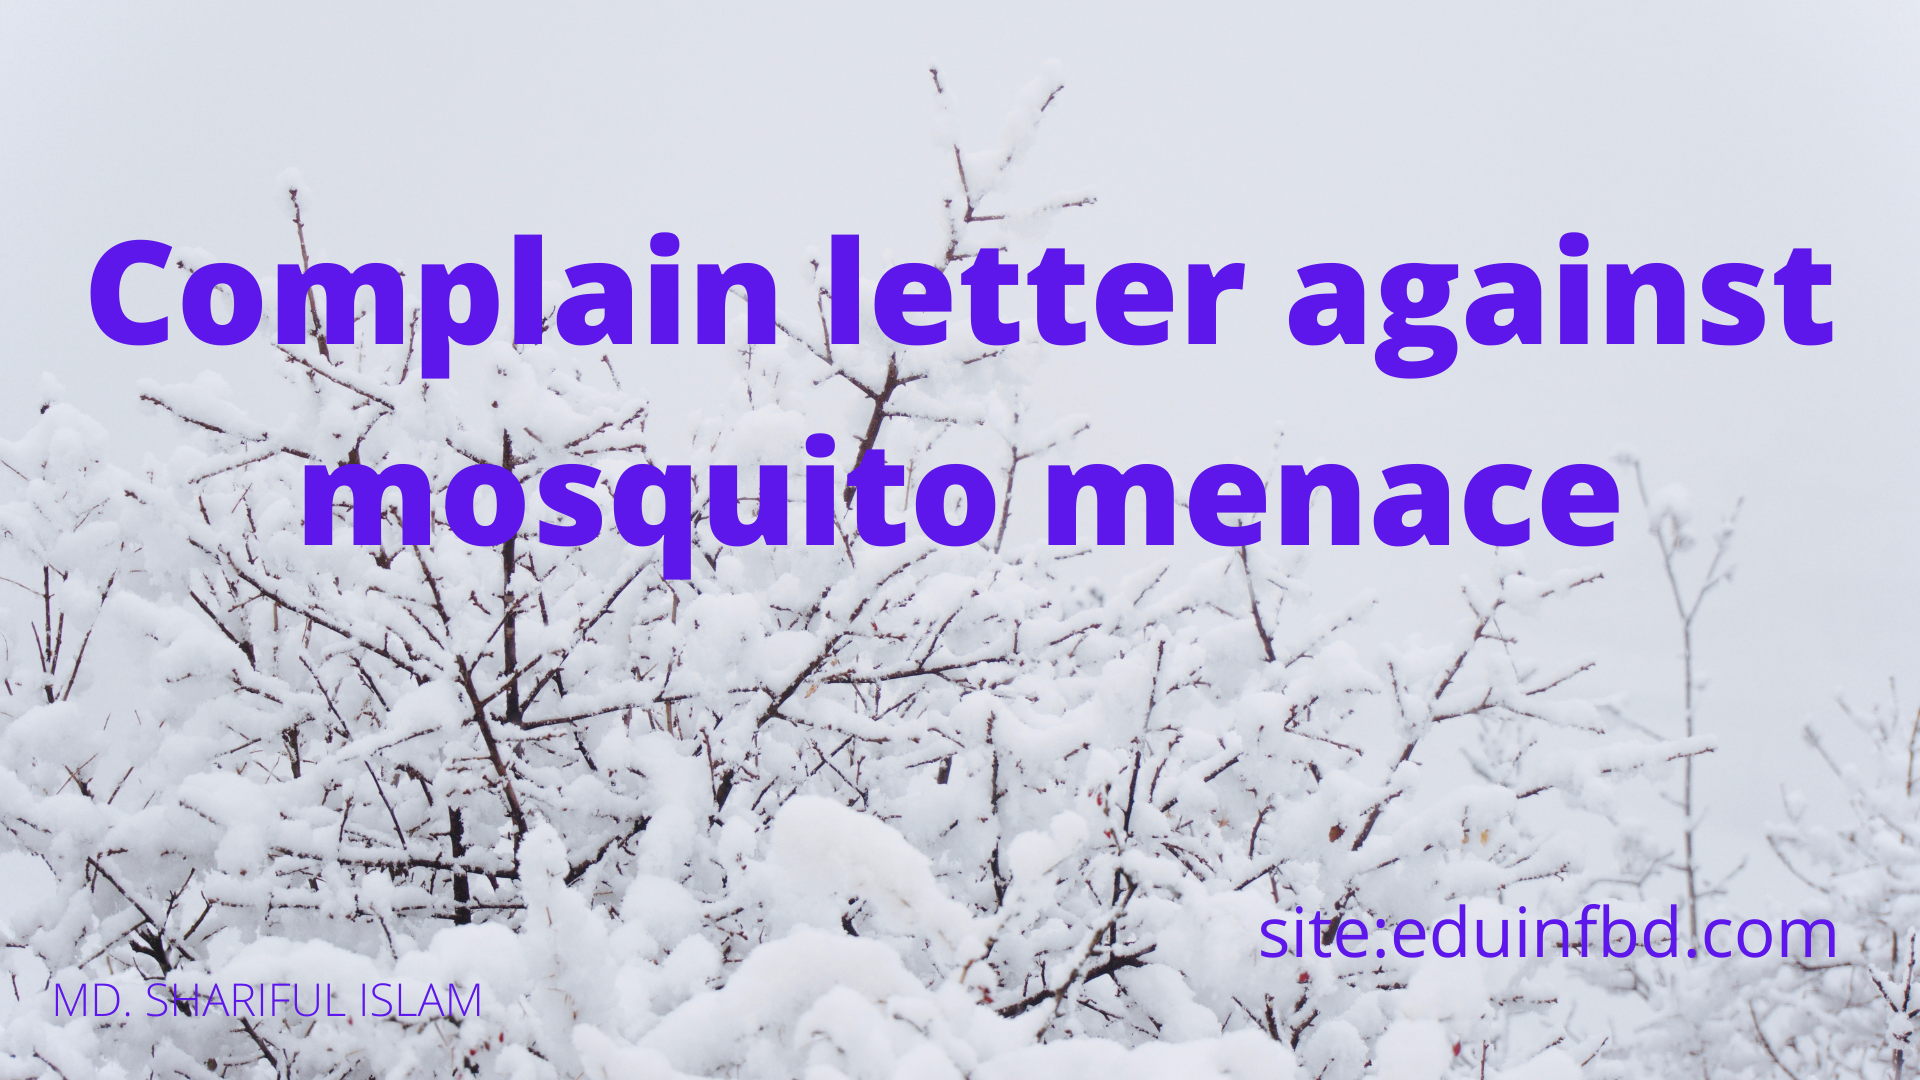 Complain letter against mosquito menace